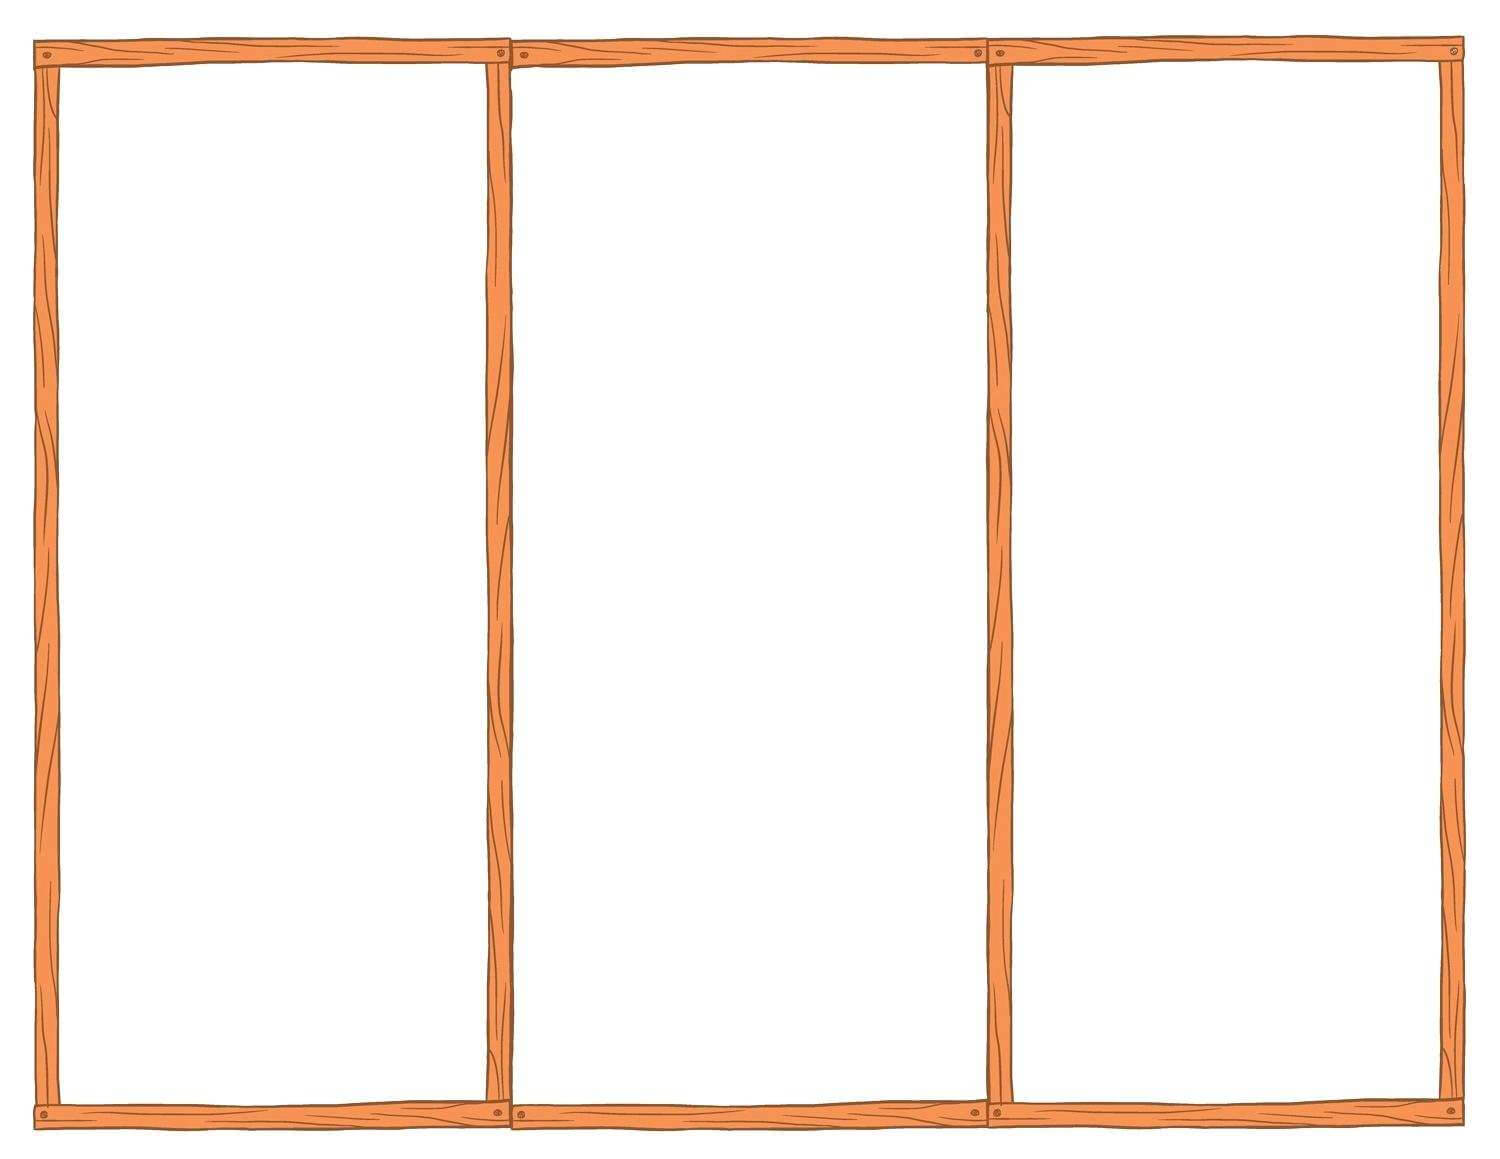 71 Format Quarter Fold Thank You Card Template Word With Regard To Blank Quarter Fold Card Template